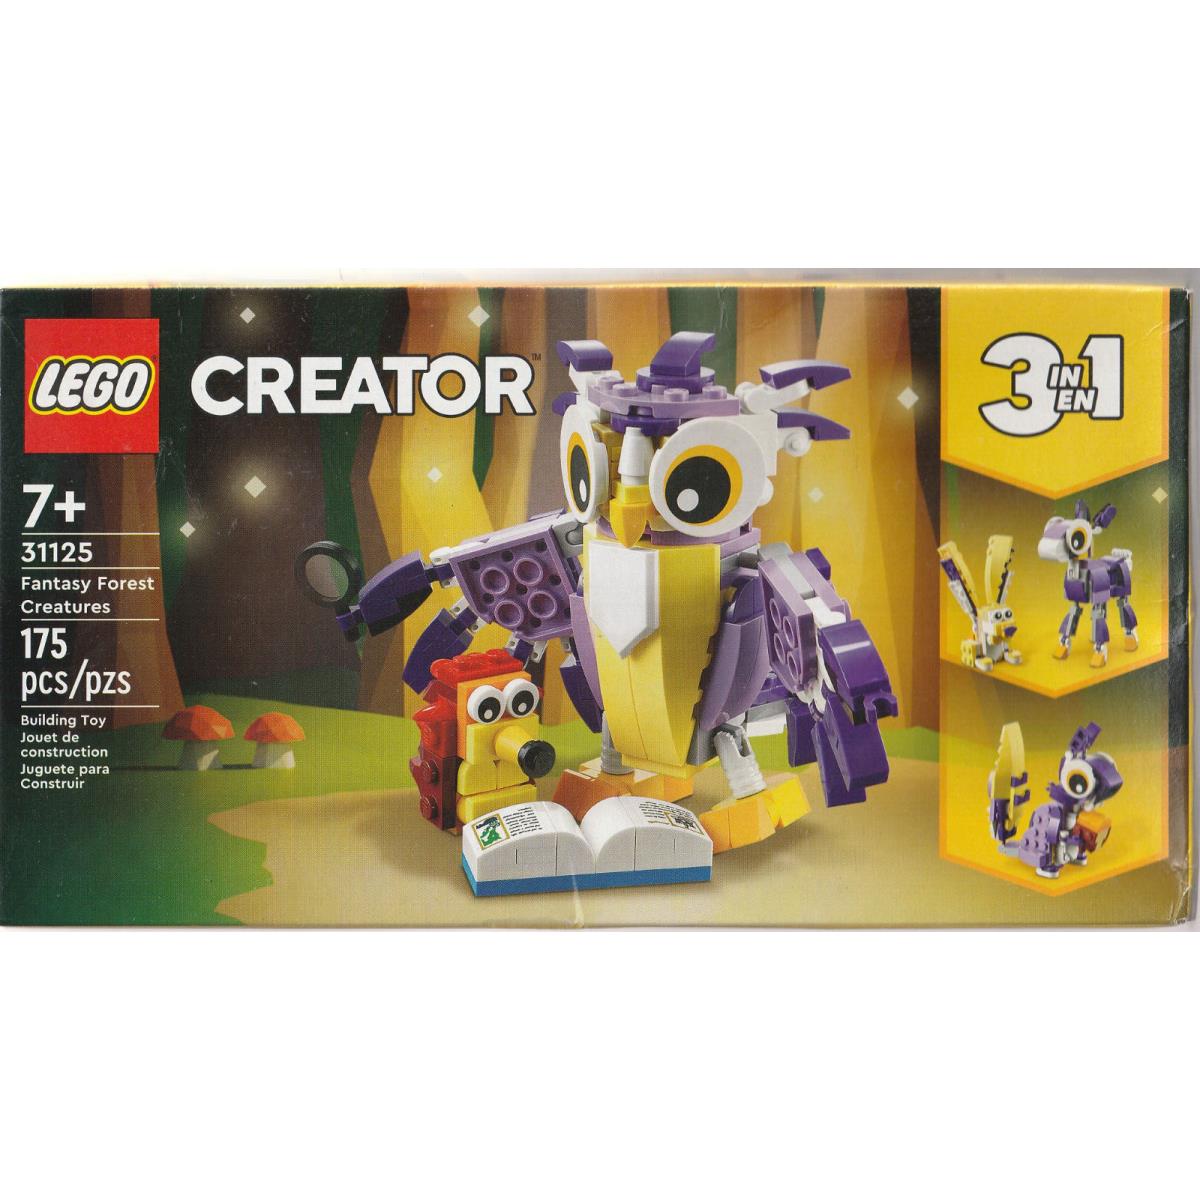 31125 Fantasy Forest Creatures Lego Creator 3 in 1 Legos Set Owl Hedgehog